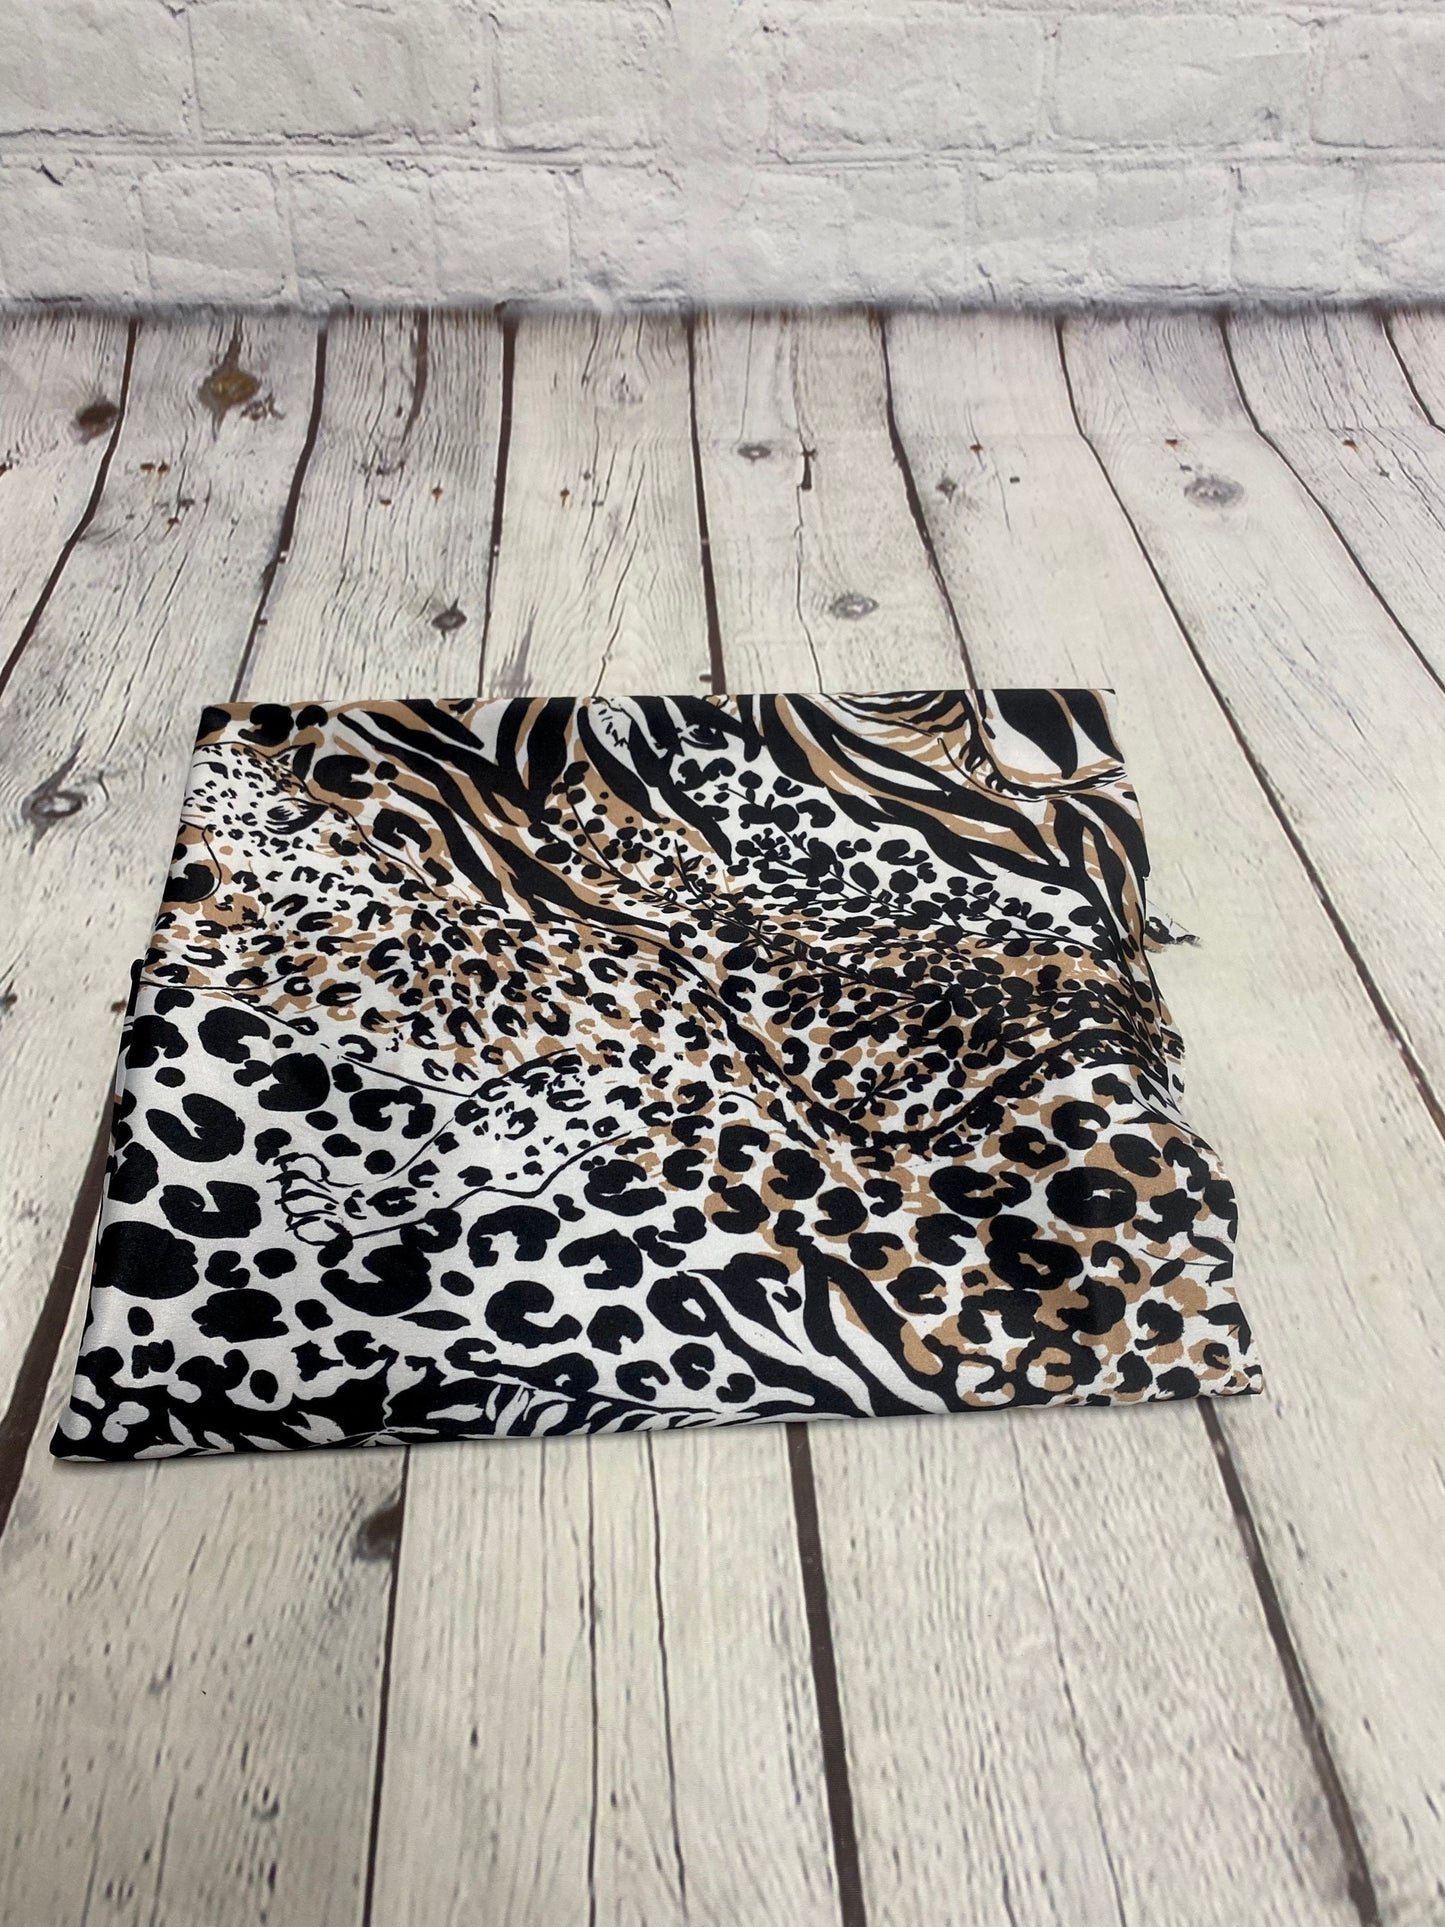 4 Way Stretch Print Nylon Spandex Fabric By The Yard Tricot Swim Wear Bikini Active Wear Brown Cheetah Zebra Leopard Animal  Print 280 GSM